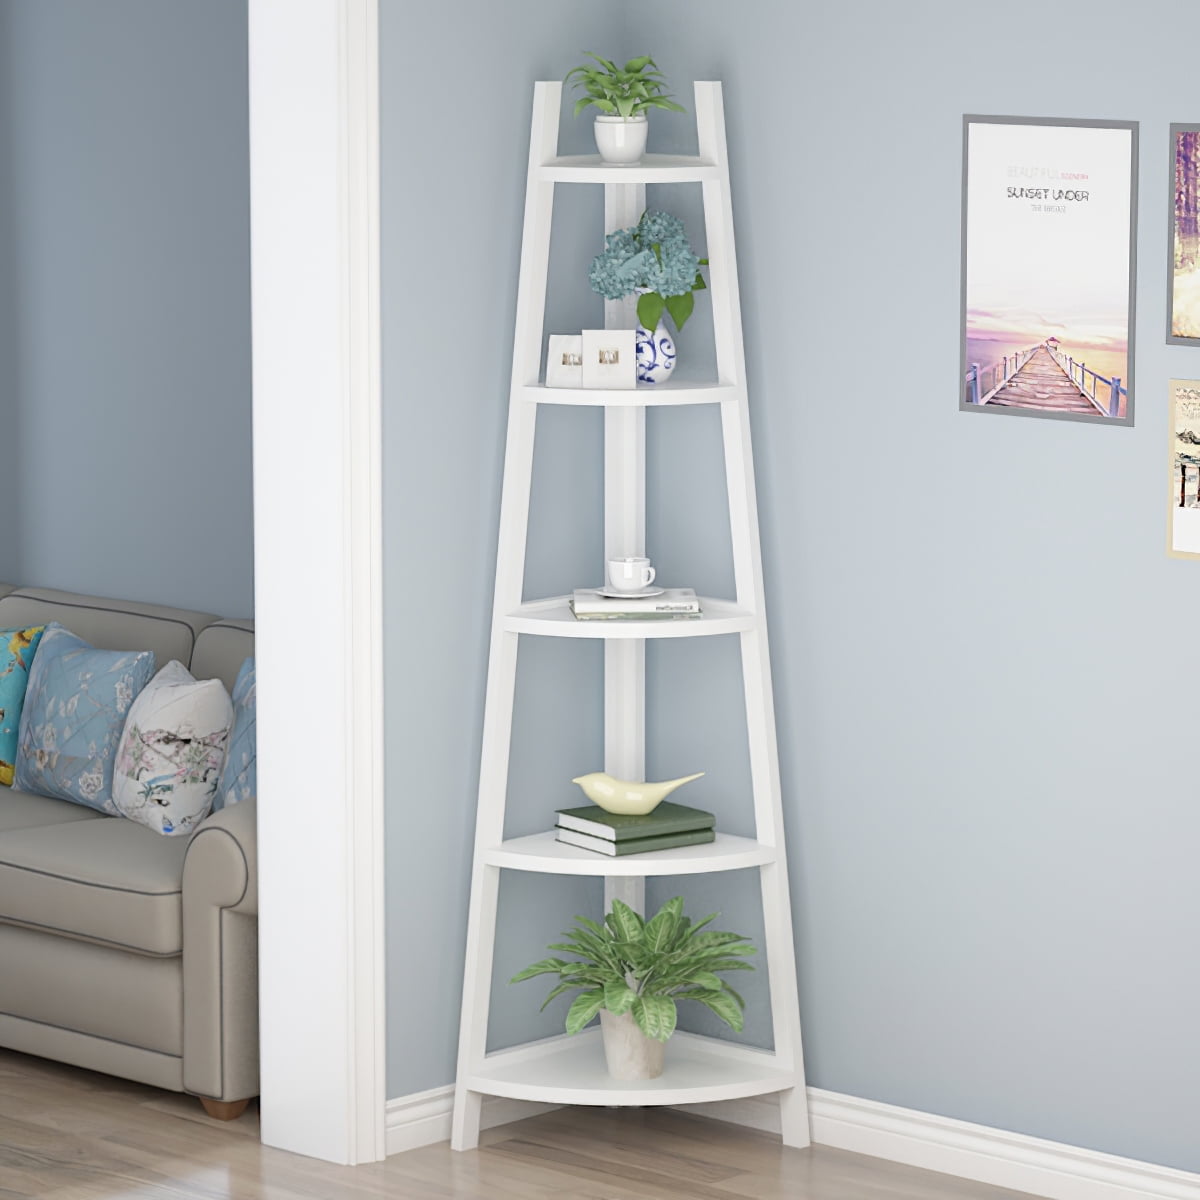 5-Tier Stylish Corner Freestanding Bookcase Shelf Wall Shelving Stan 